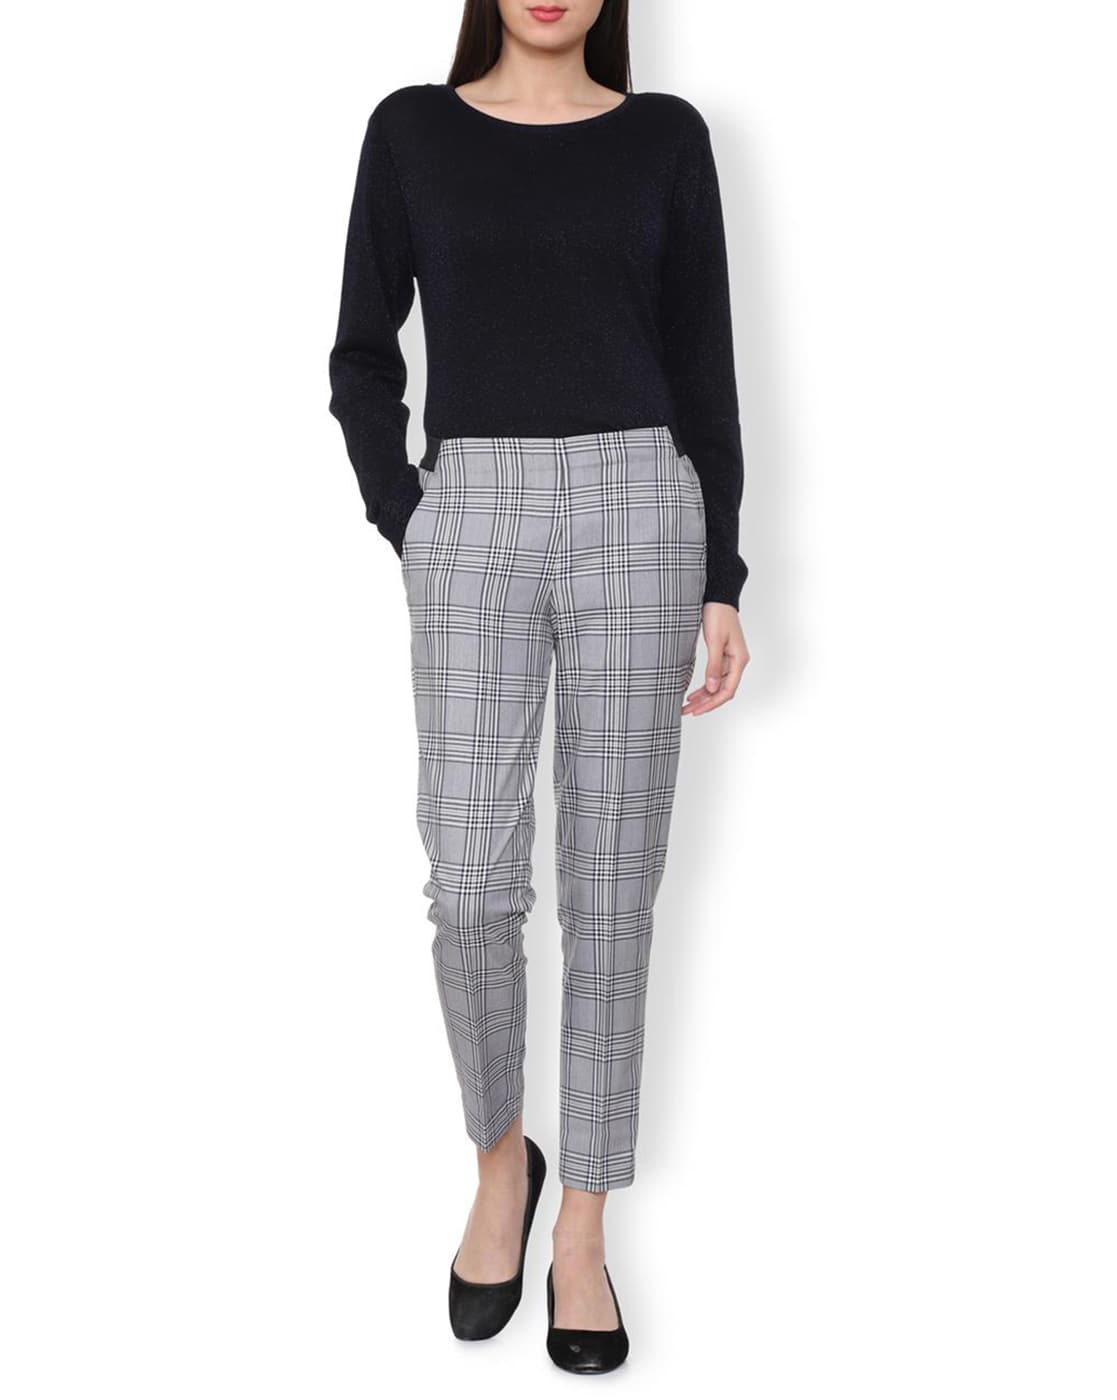 Grey Check Tartan PJs Pyjama Set Cotton Winter PJs – Just For You Boutique®